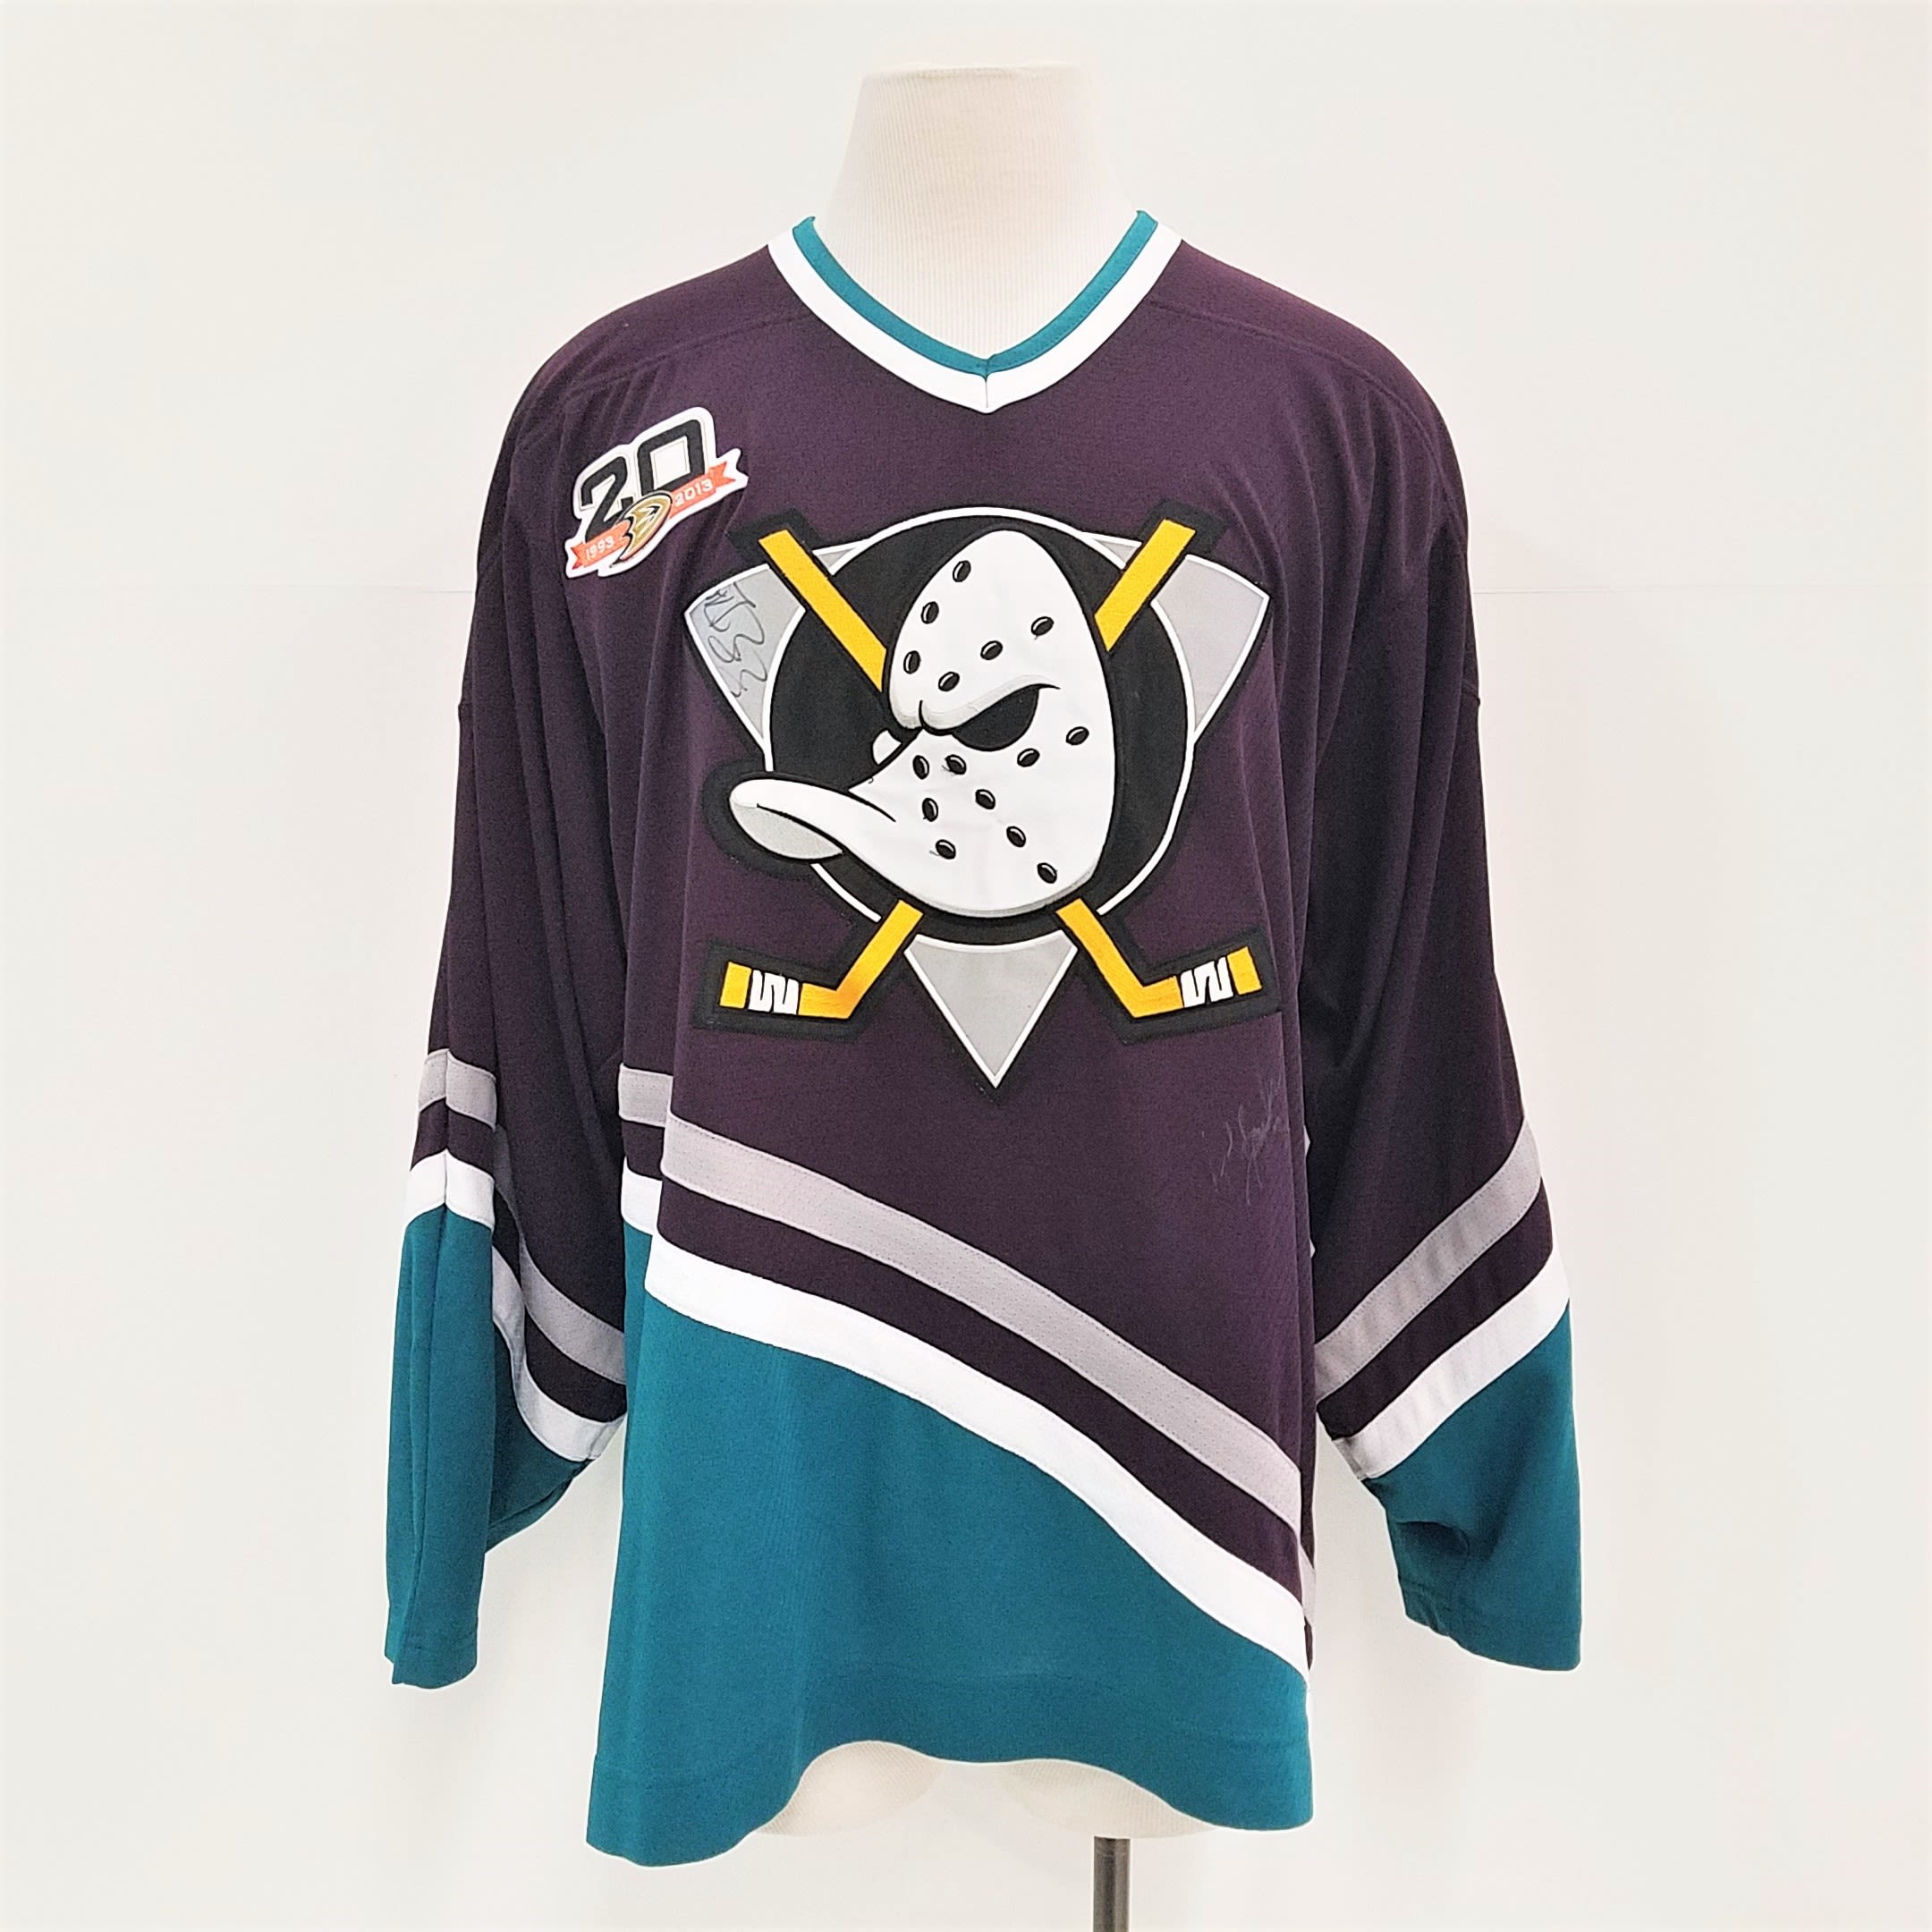 NHL, Shirts, Vintage Nhl Anaheim Ducks Jersey